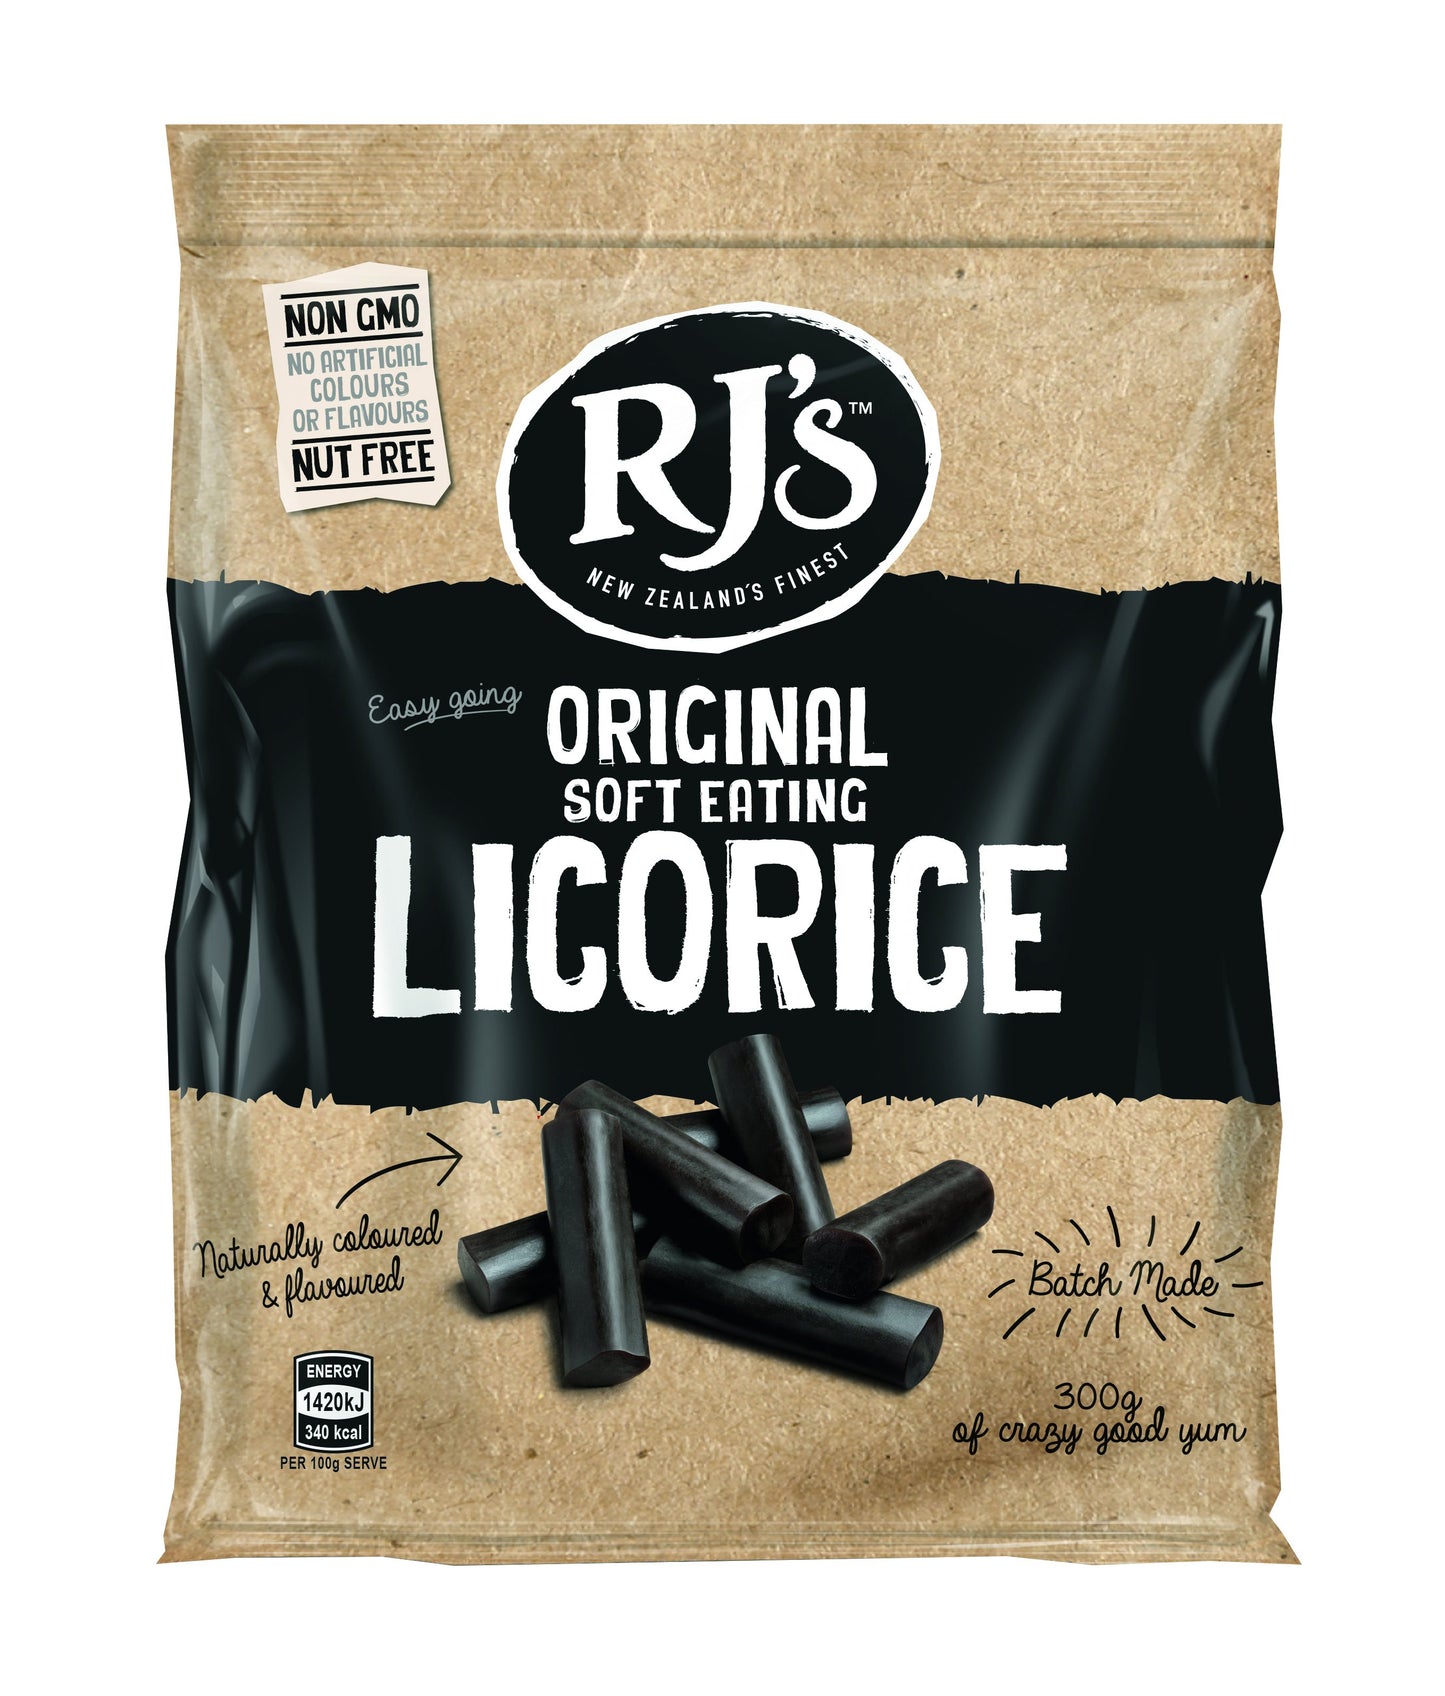 RJs Original Liquorice